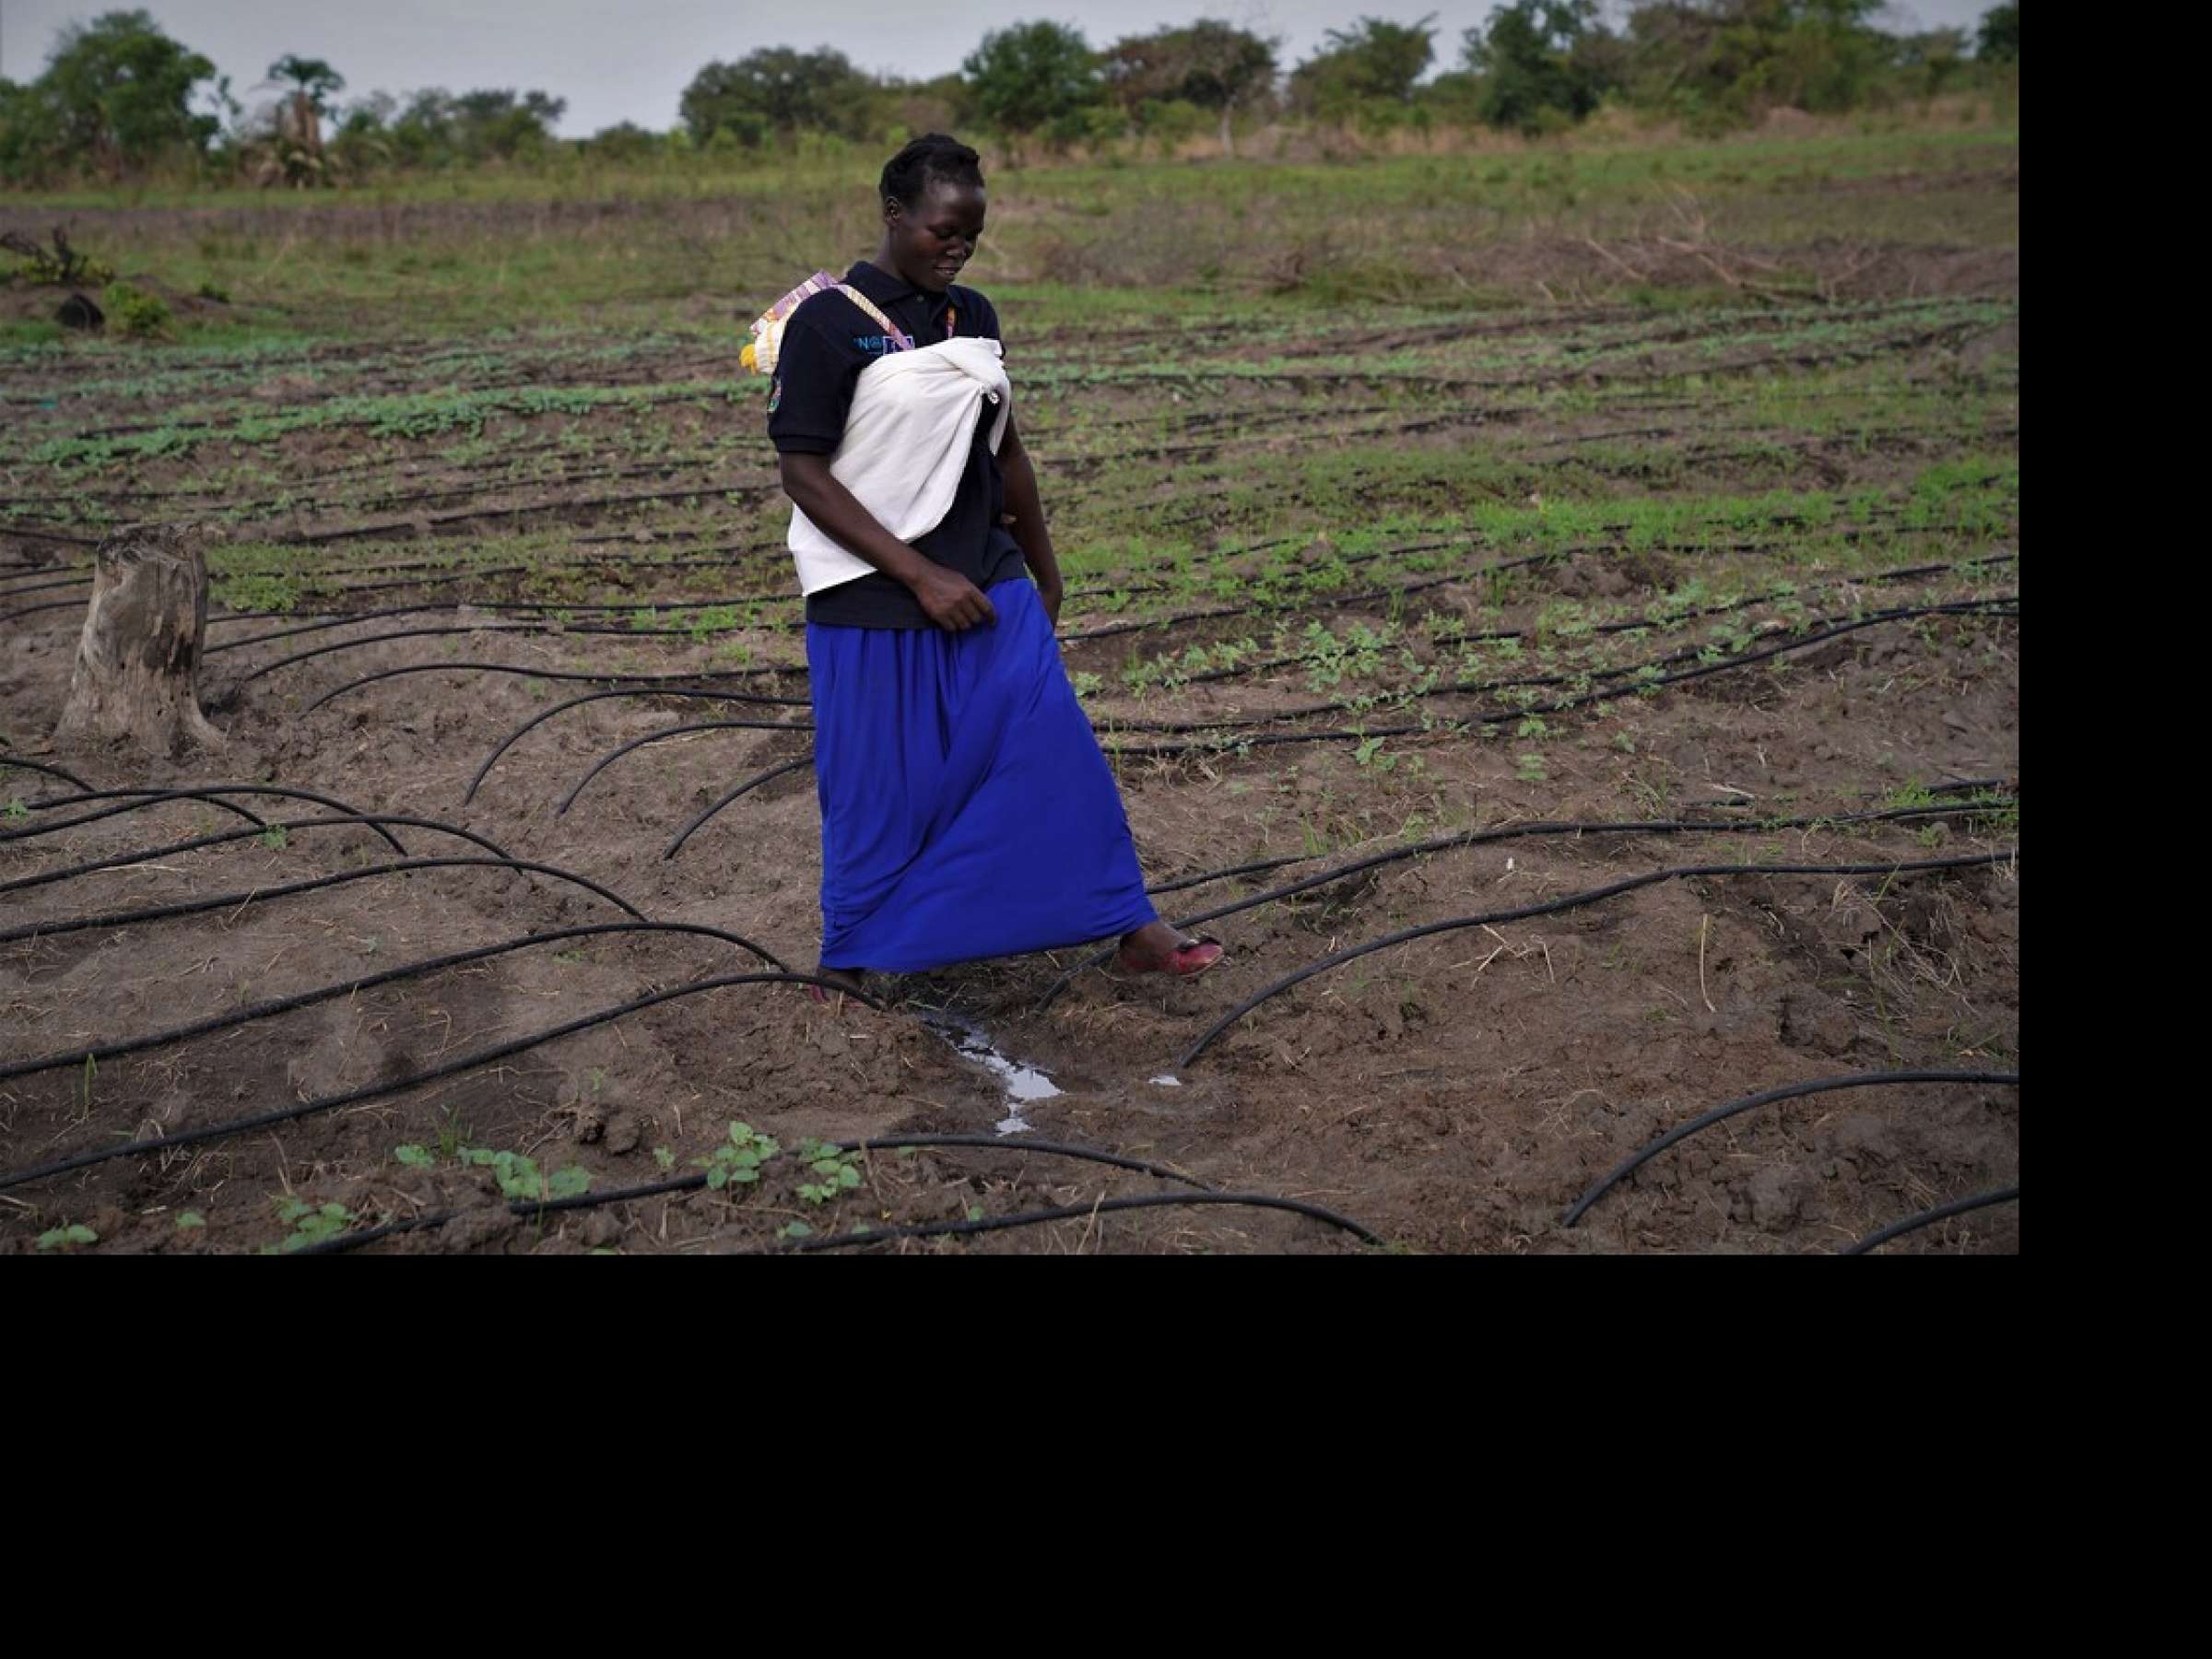 A woman walks through a field